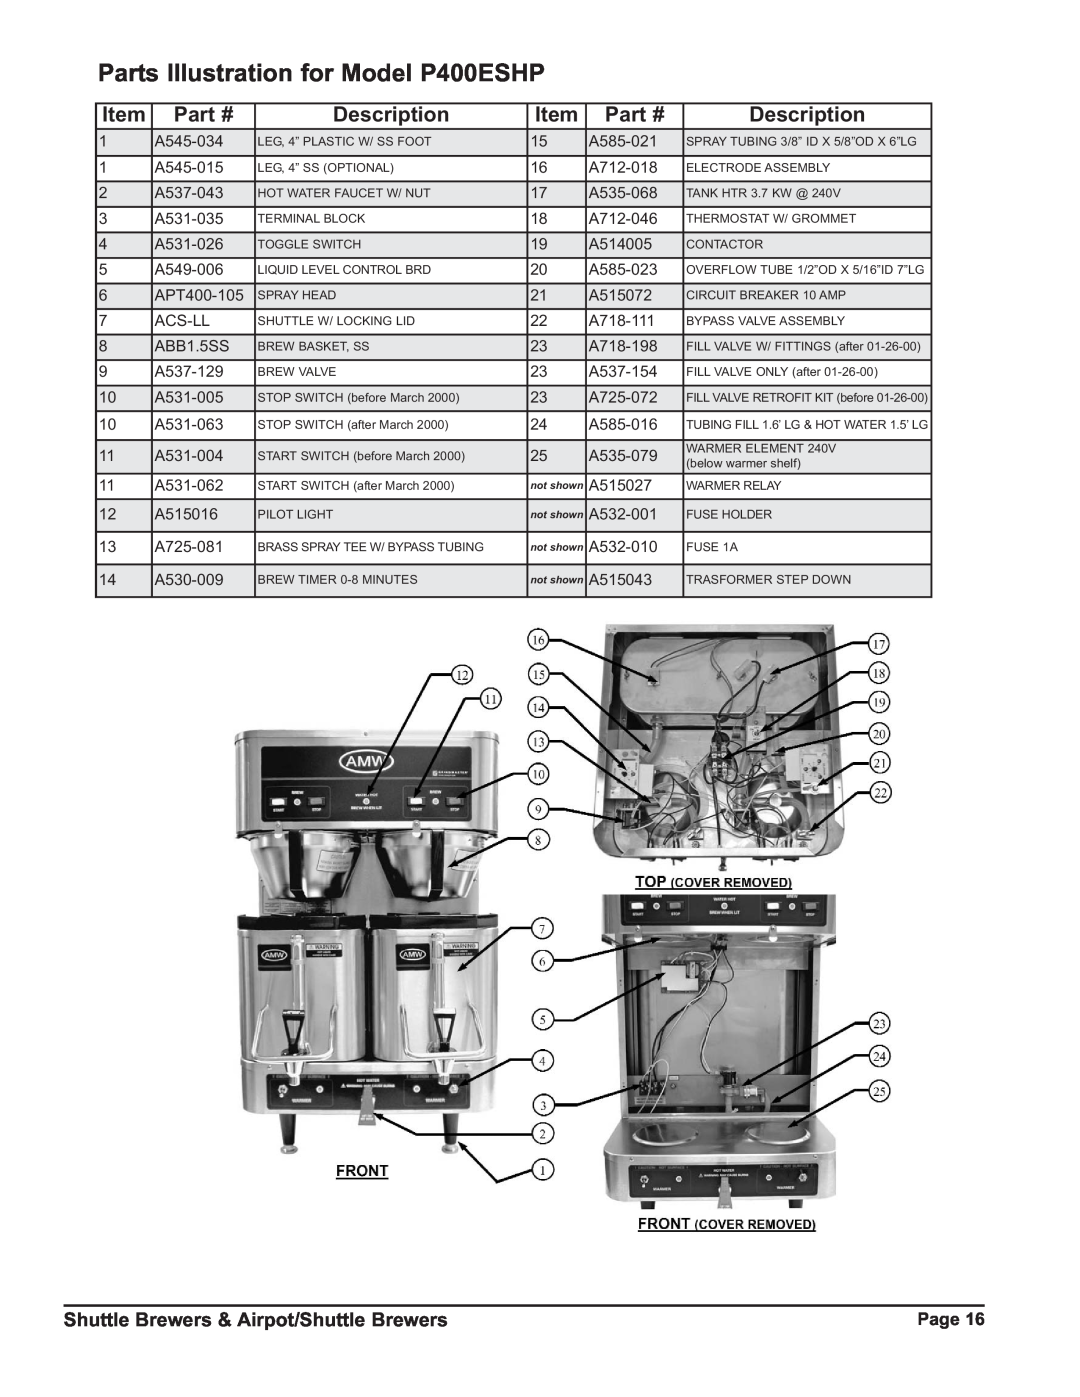 Grindmaster Parts Illustration for Model P400ESHP, Description, Shuttle Brewers & Airpot/Shuttle Brewers 